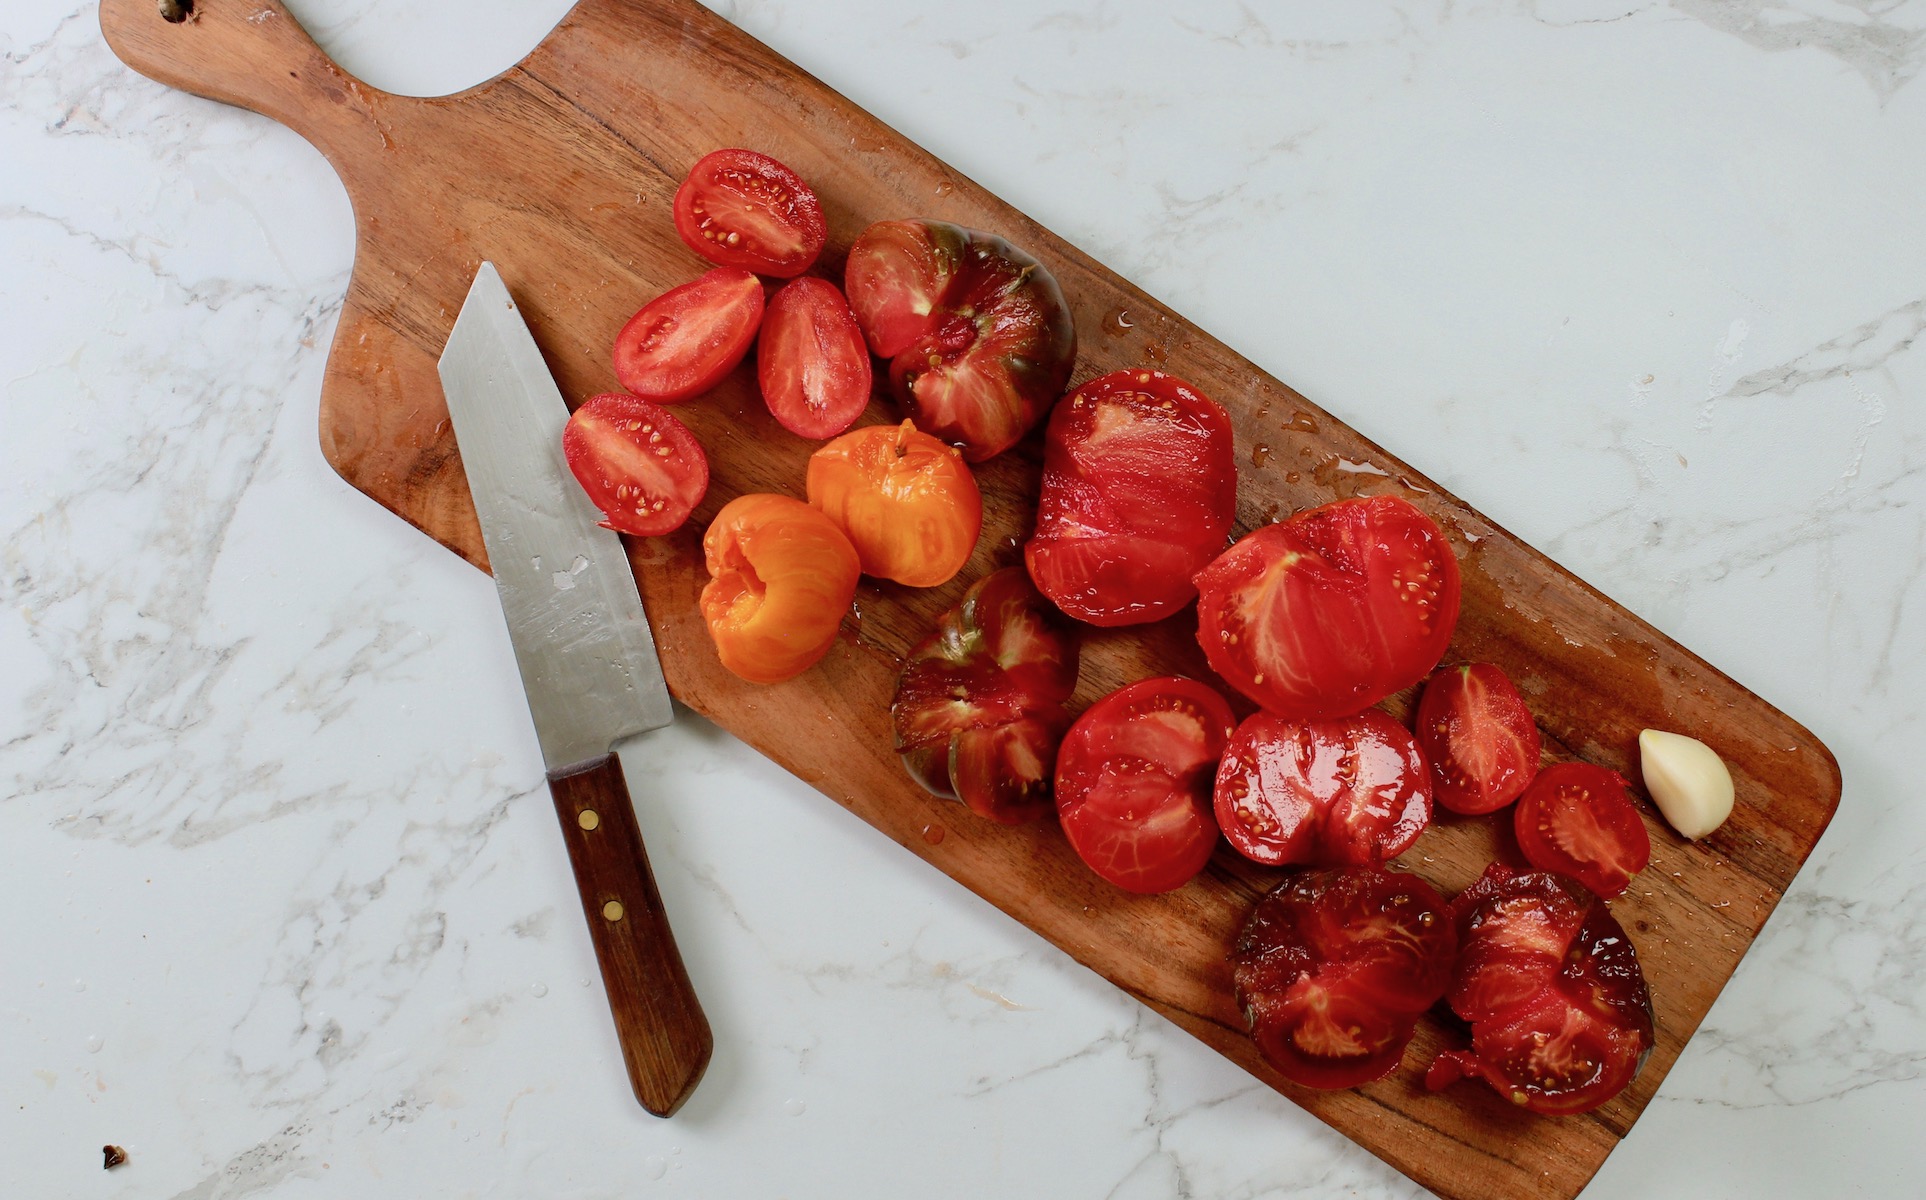 step 1. wash tomatoes, peel garlic